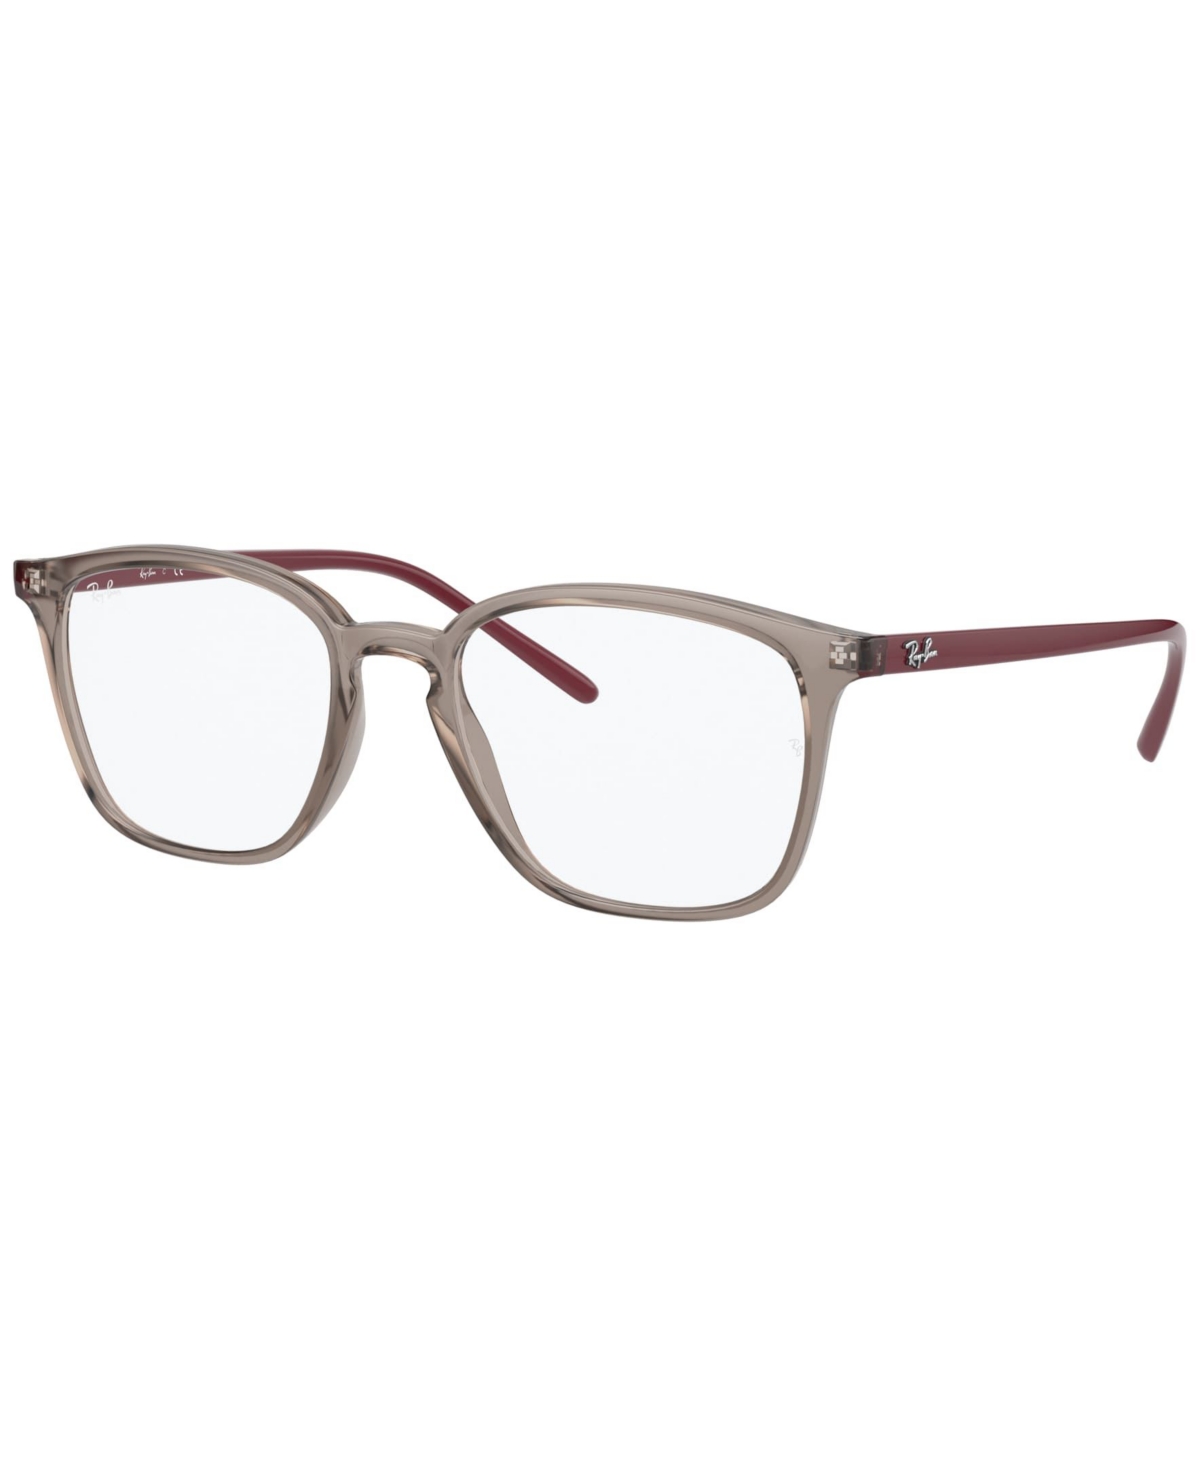 RX7185 Unisex Square Eyeglasses - Gray